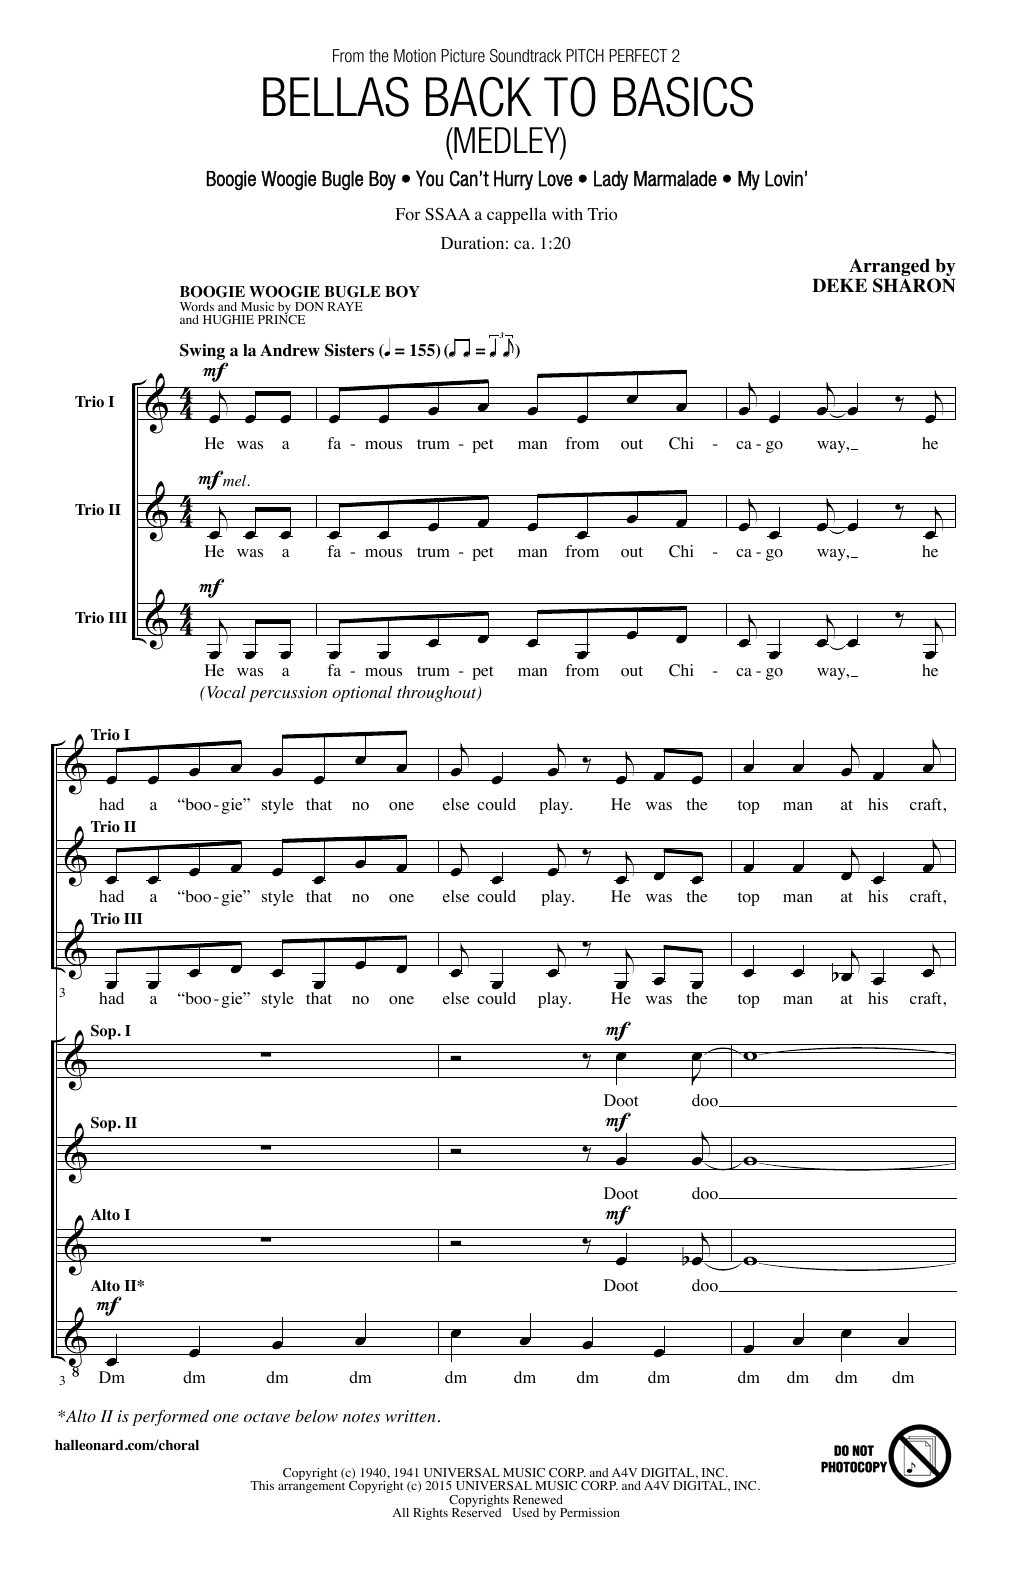 Deke Sharon Bellas Back To Basics (Medley) Sheet Music Notes & Chords for SSA - Download or Print PDF